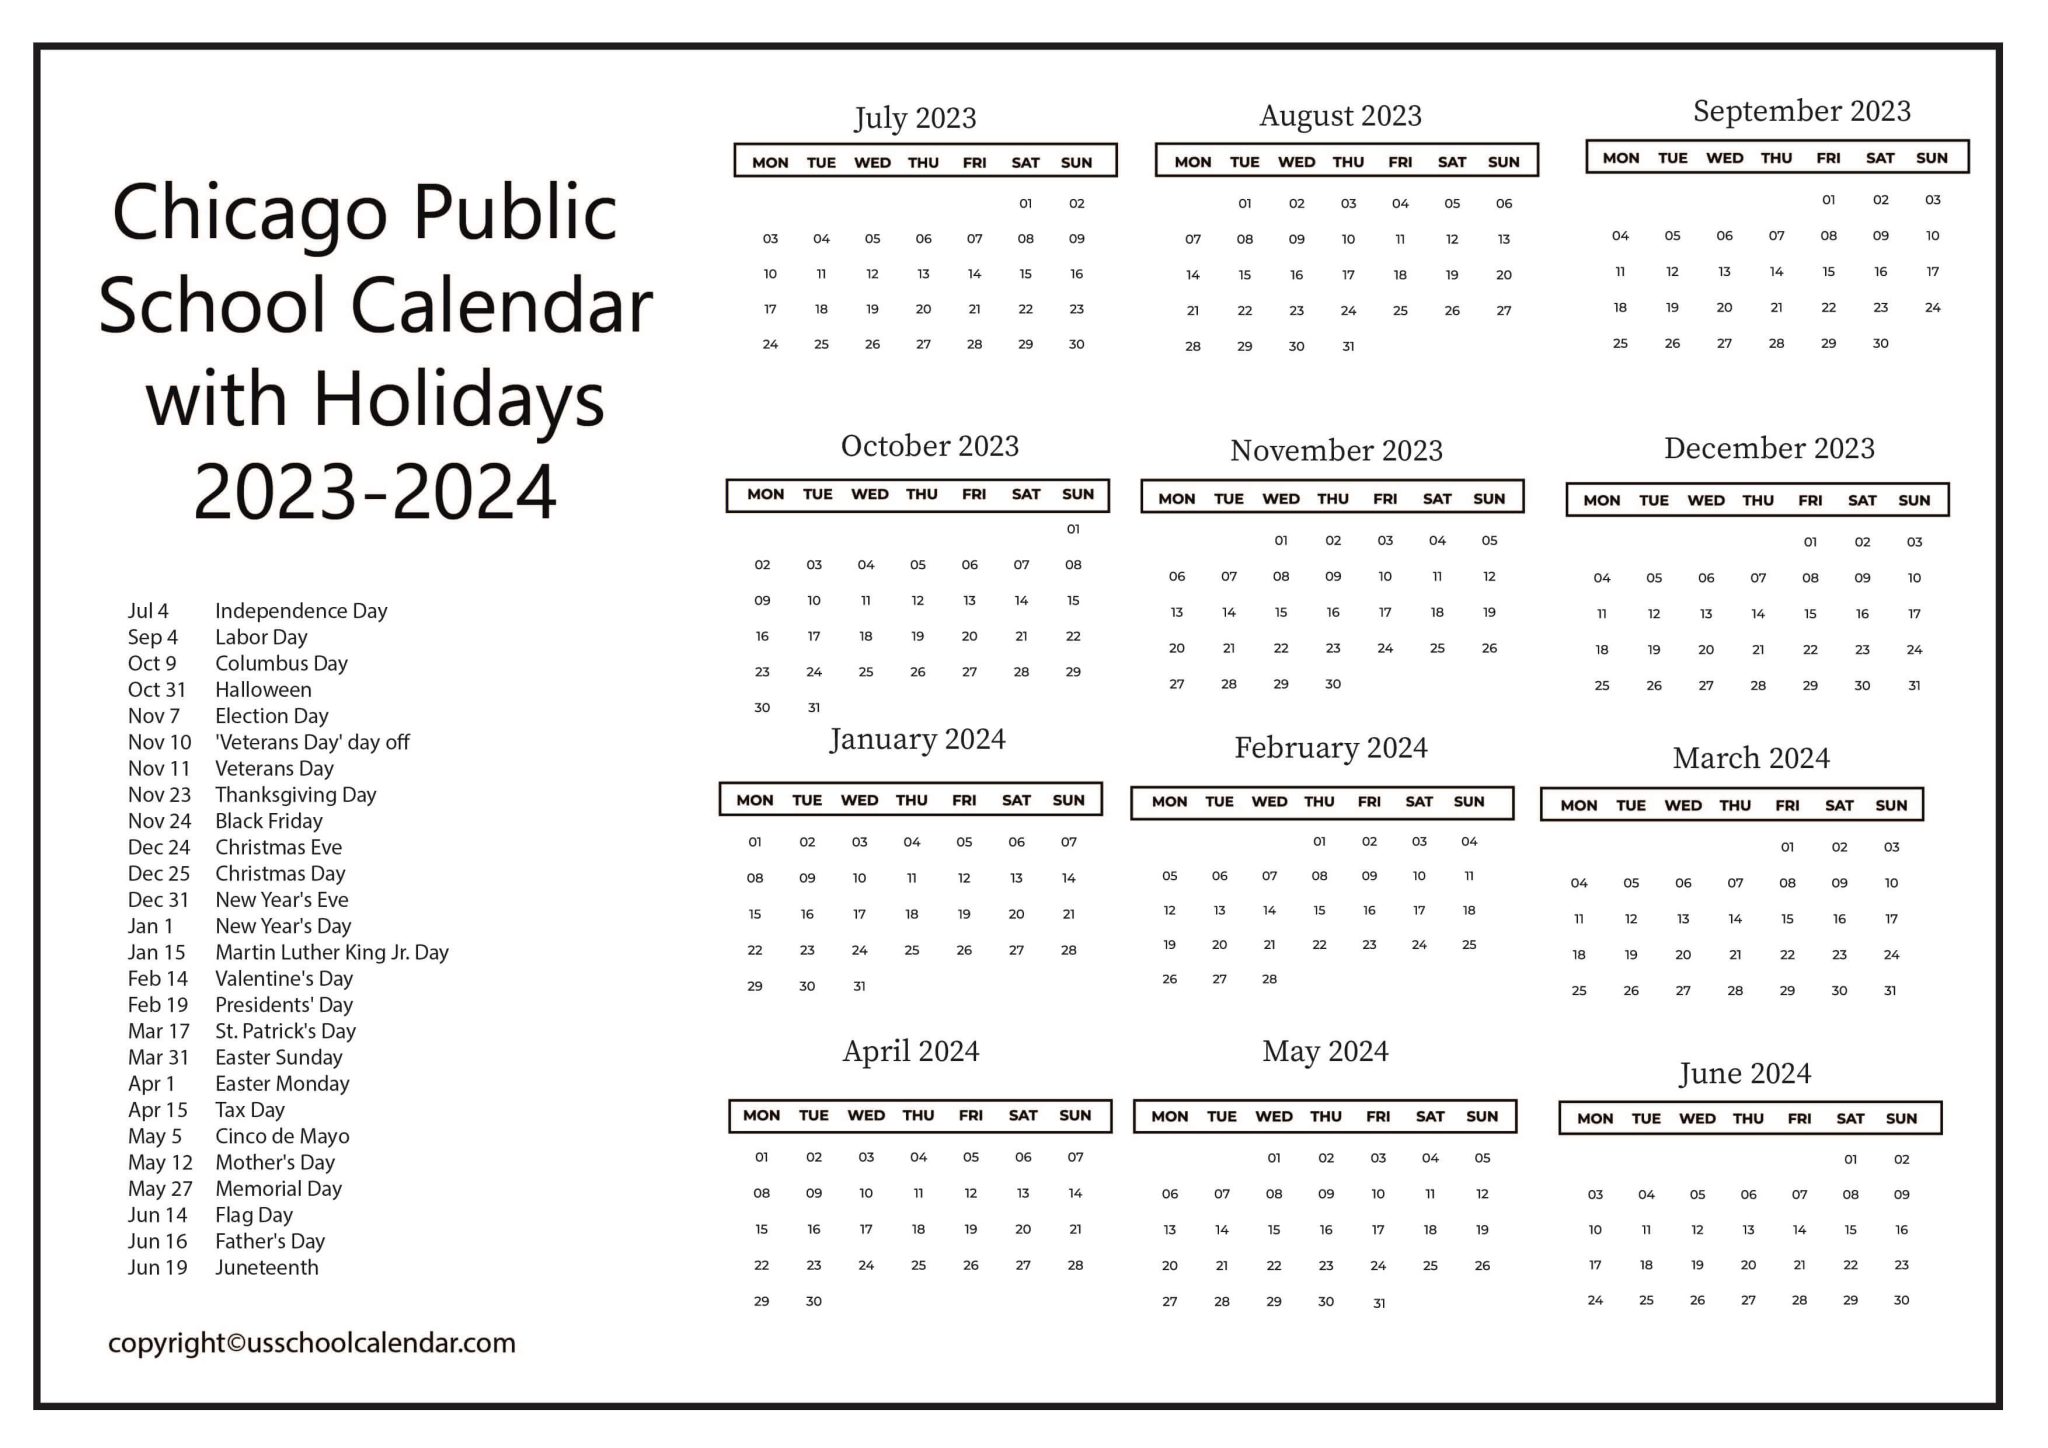 chicago-public-school-calendar-with-holidays-2023-2024